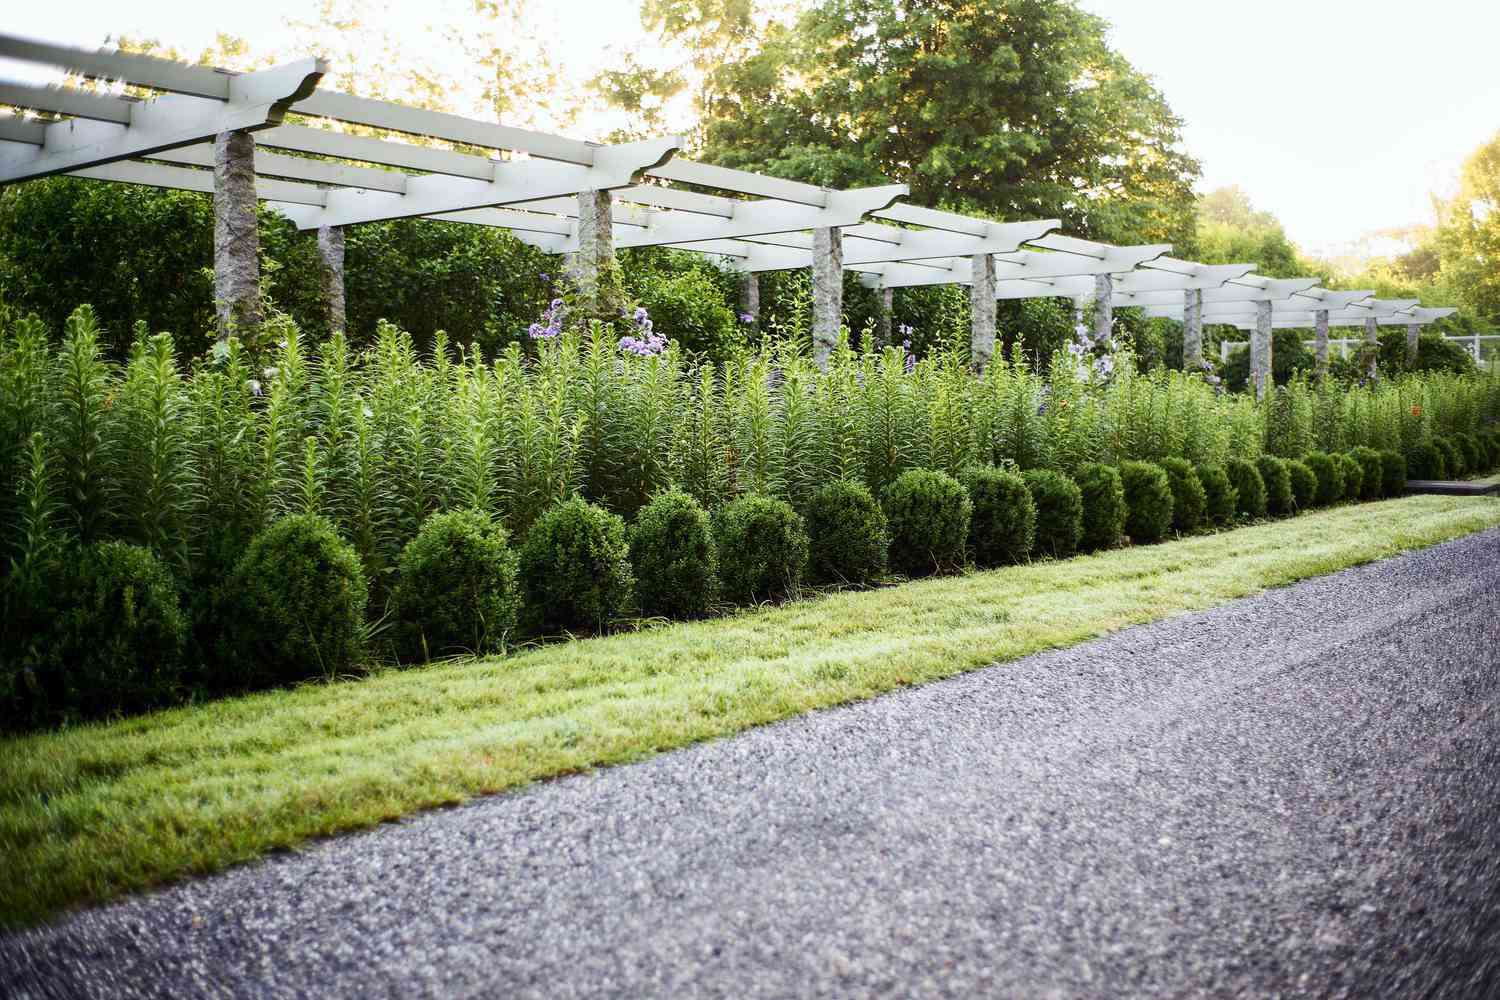 driveway border 350 feet homegrown shrubs boxwood